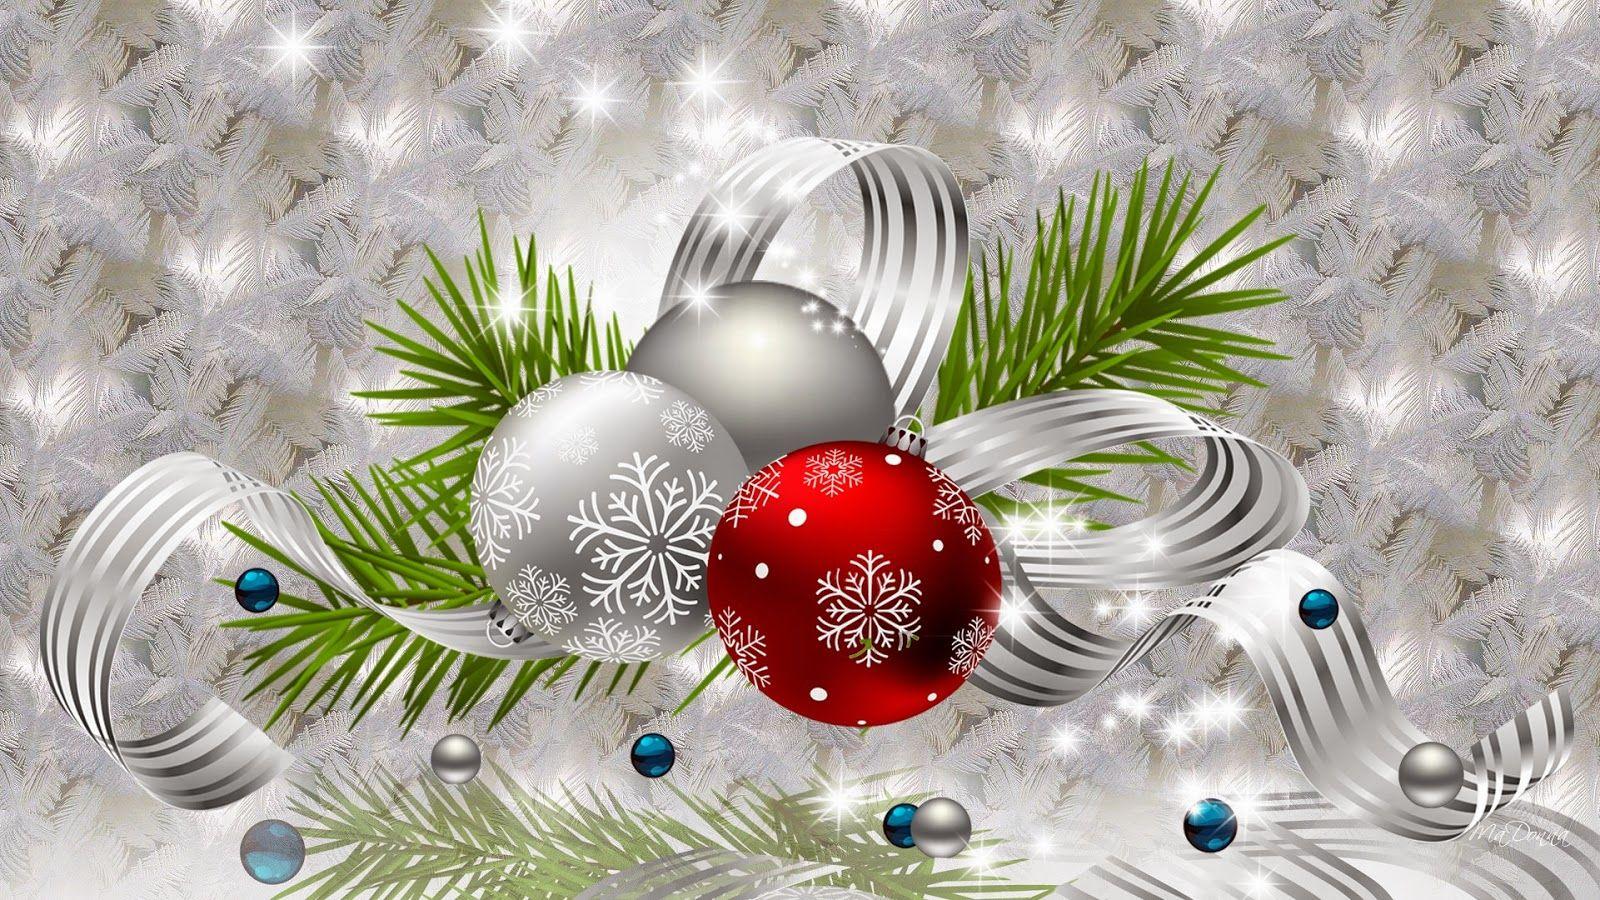 Christmas tree baubles decorations beautiful balls designs image. Christmas wallpaper, Christmas wallpaper hd, Christmas desktop